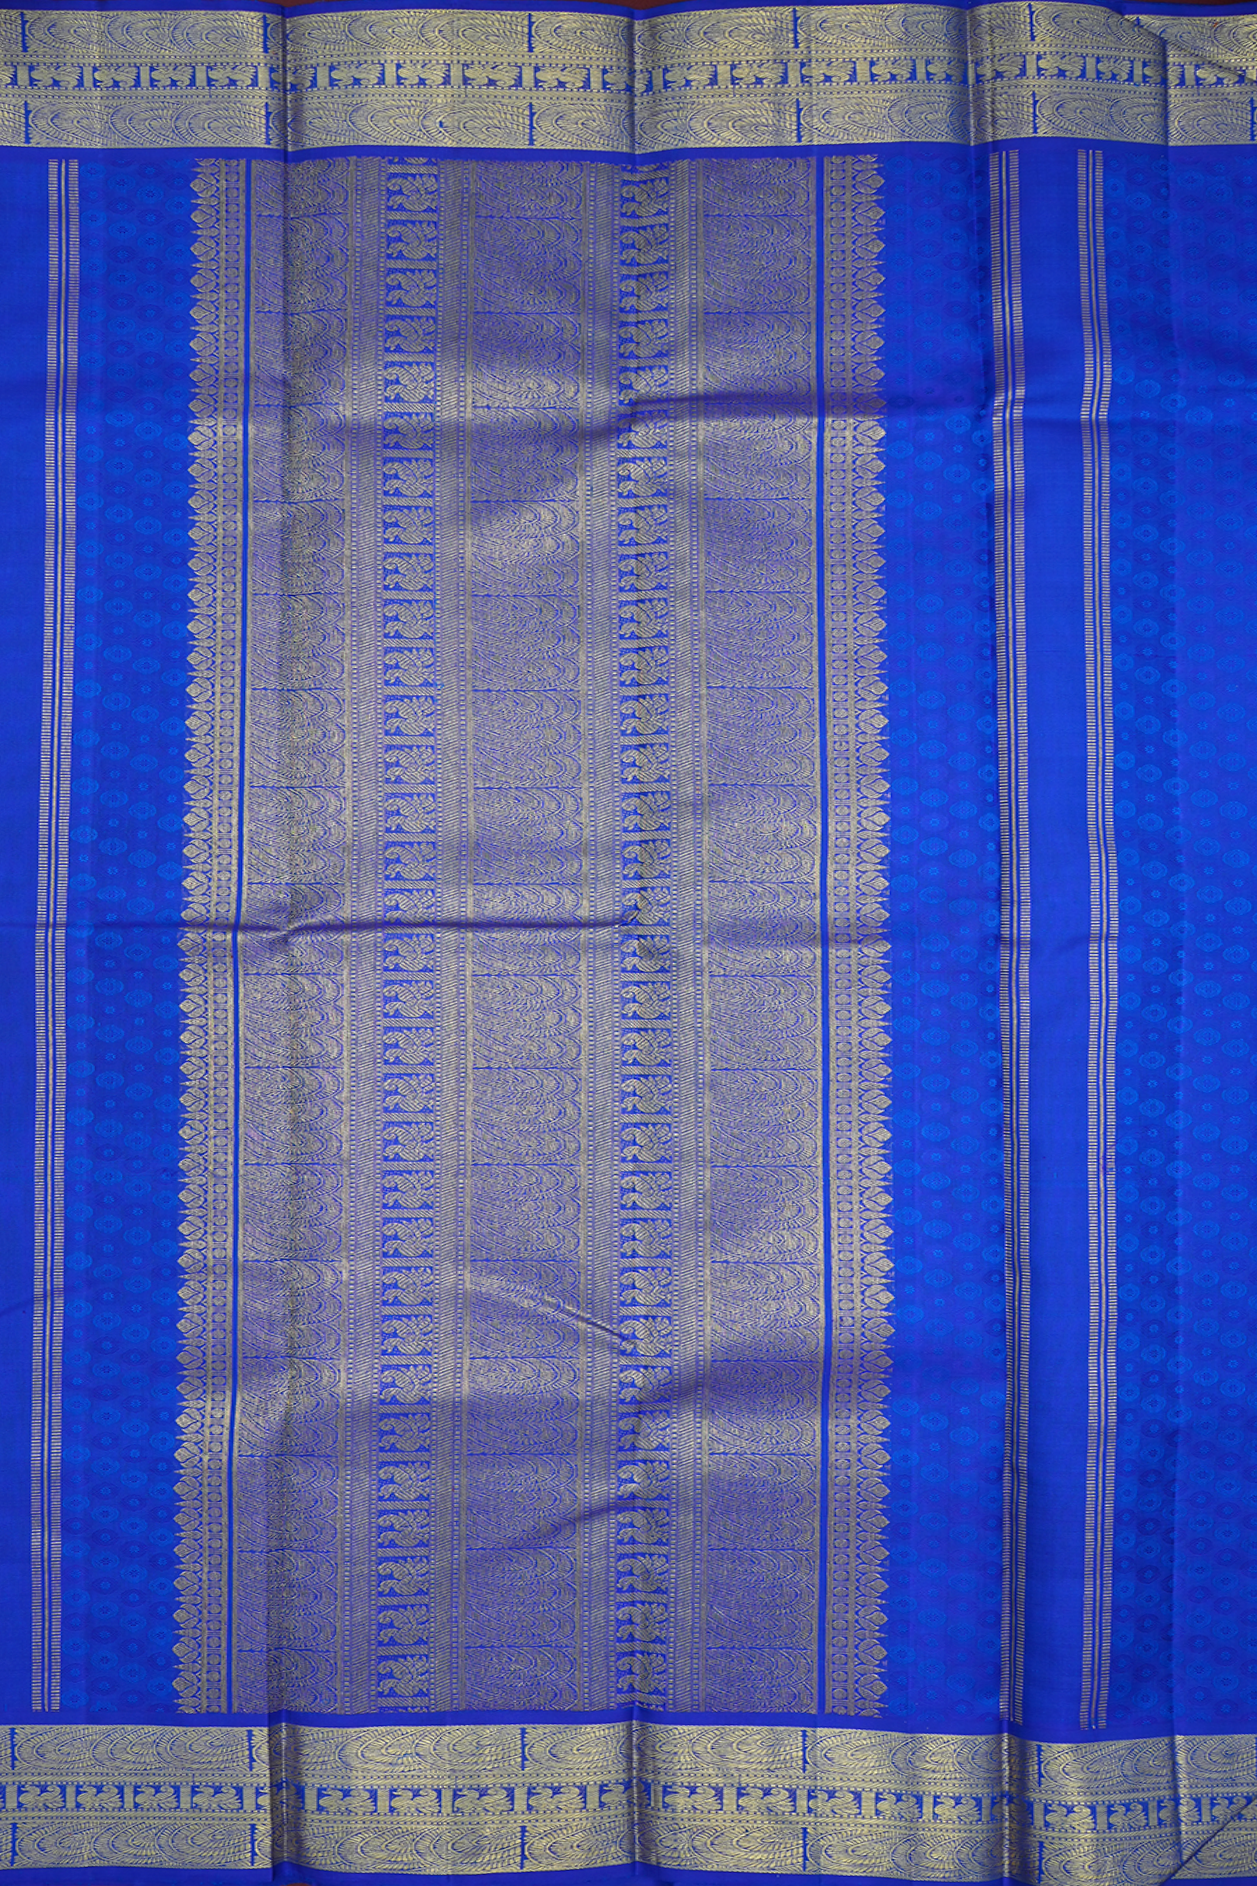 Floral Paisley Self Design Royal Blue Kanchipuram Silk Saree